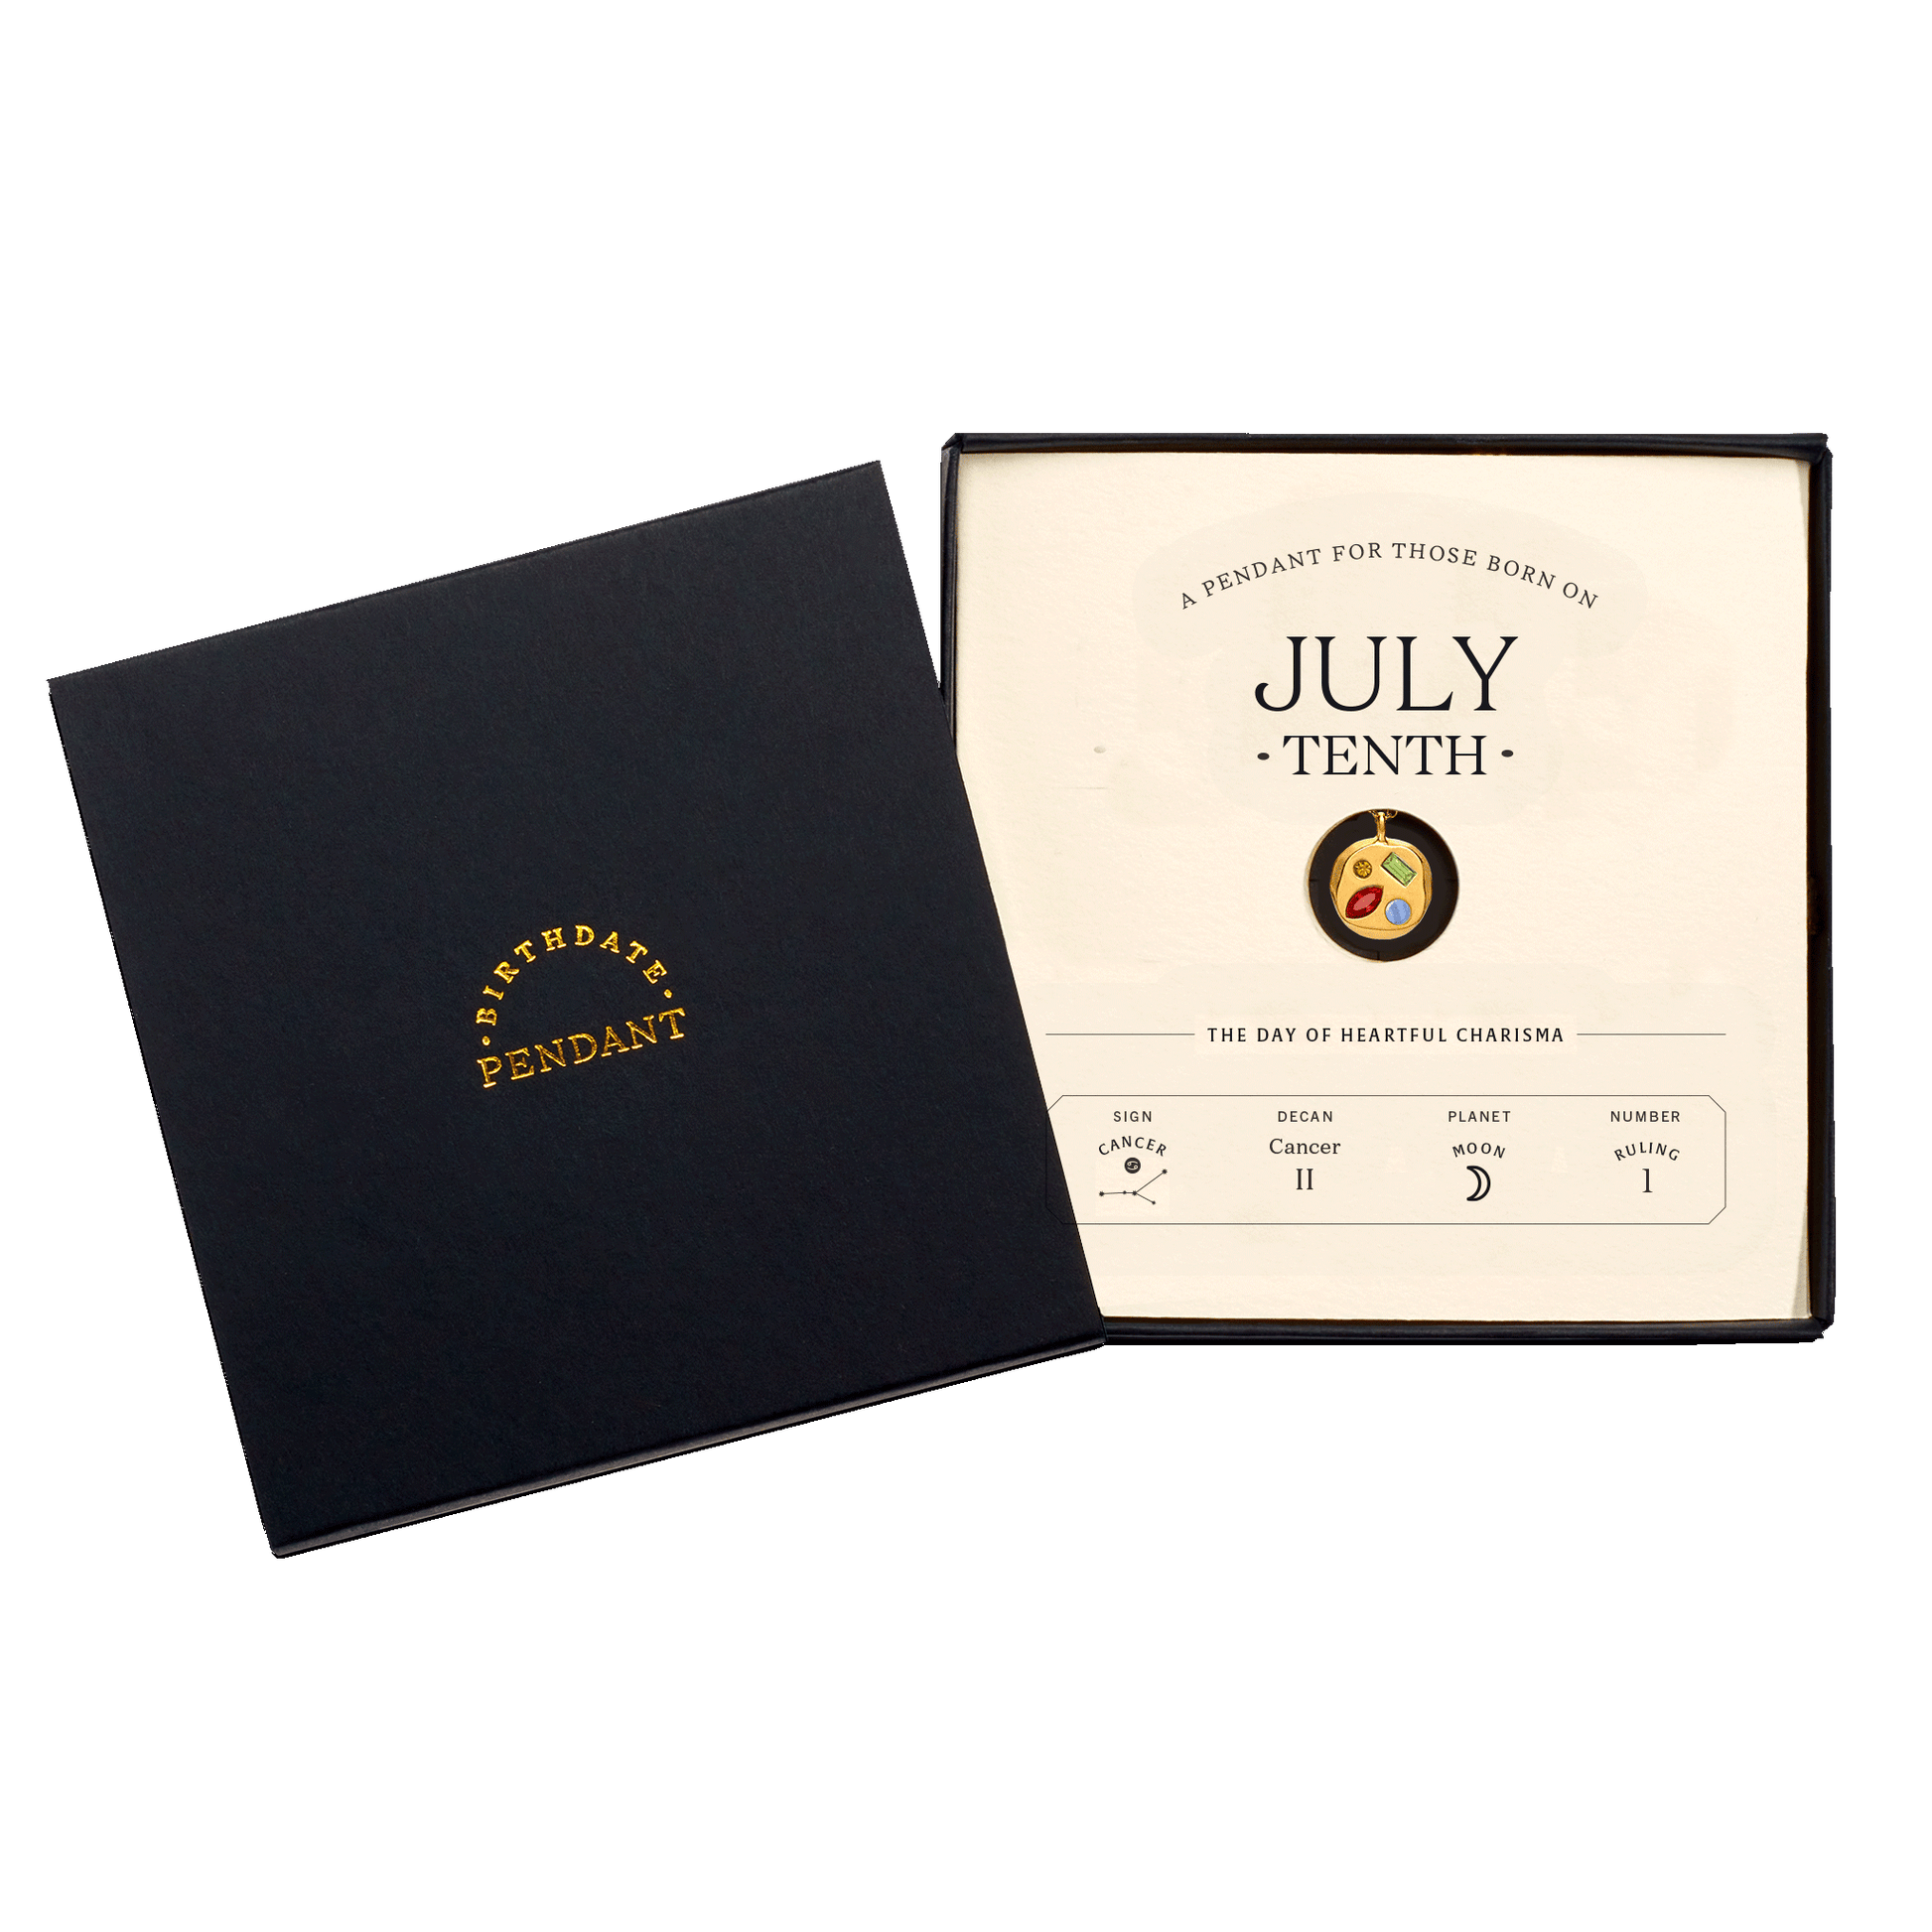 The July Tenth Pendant inside its box